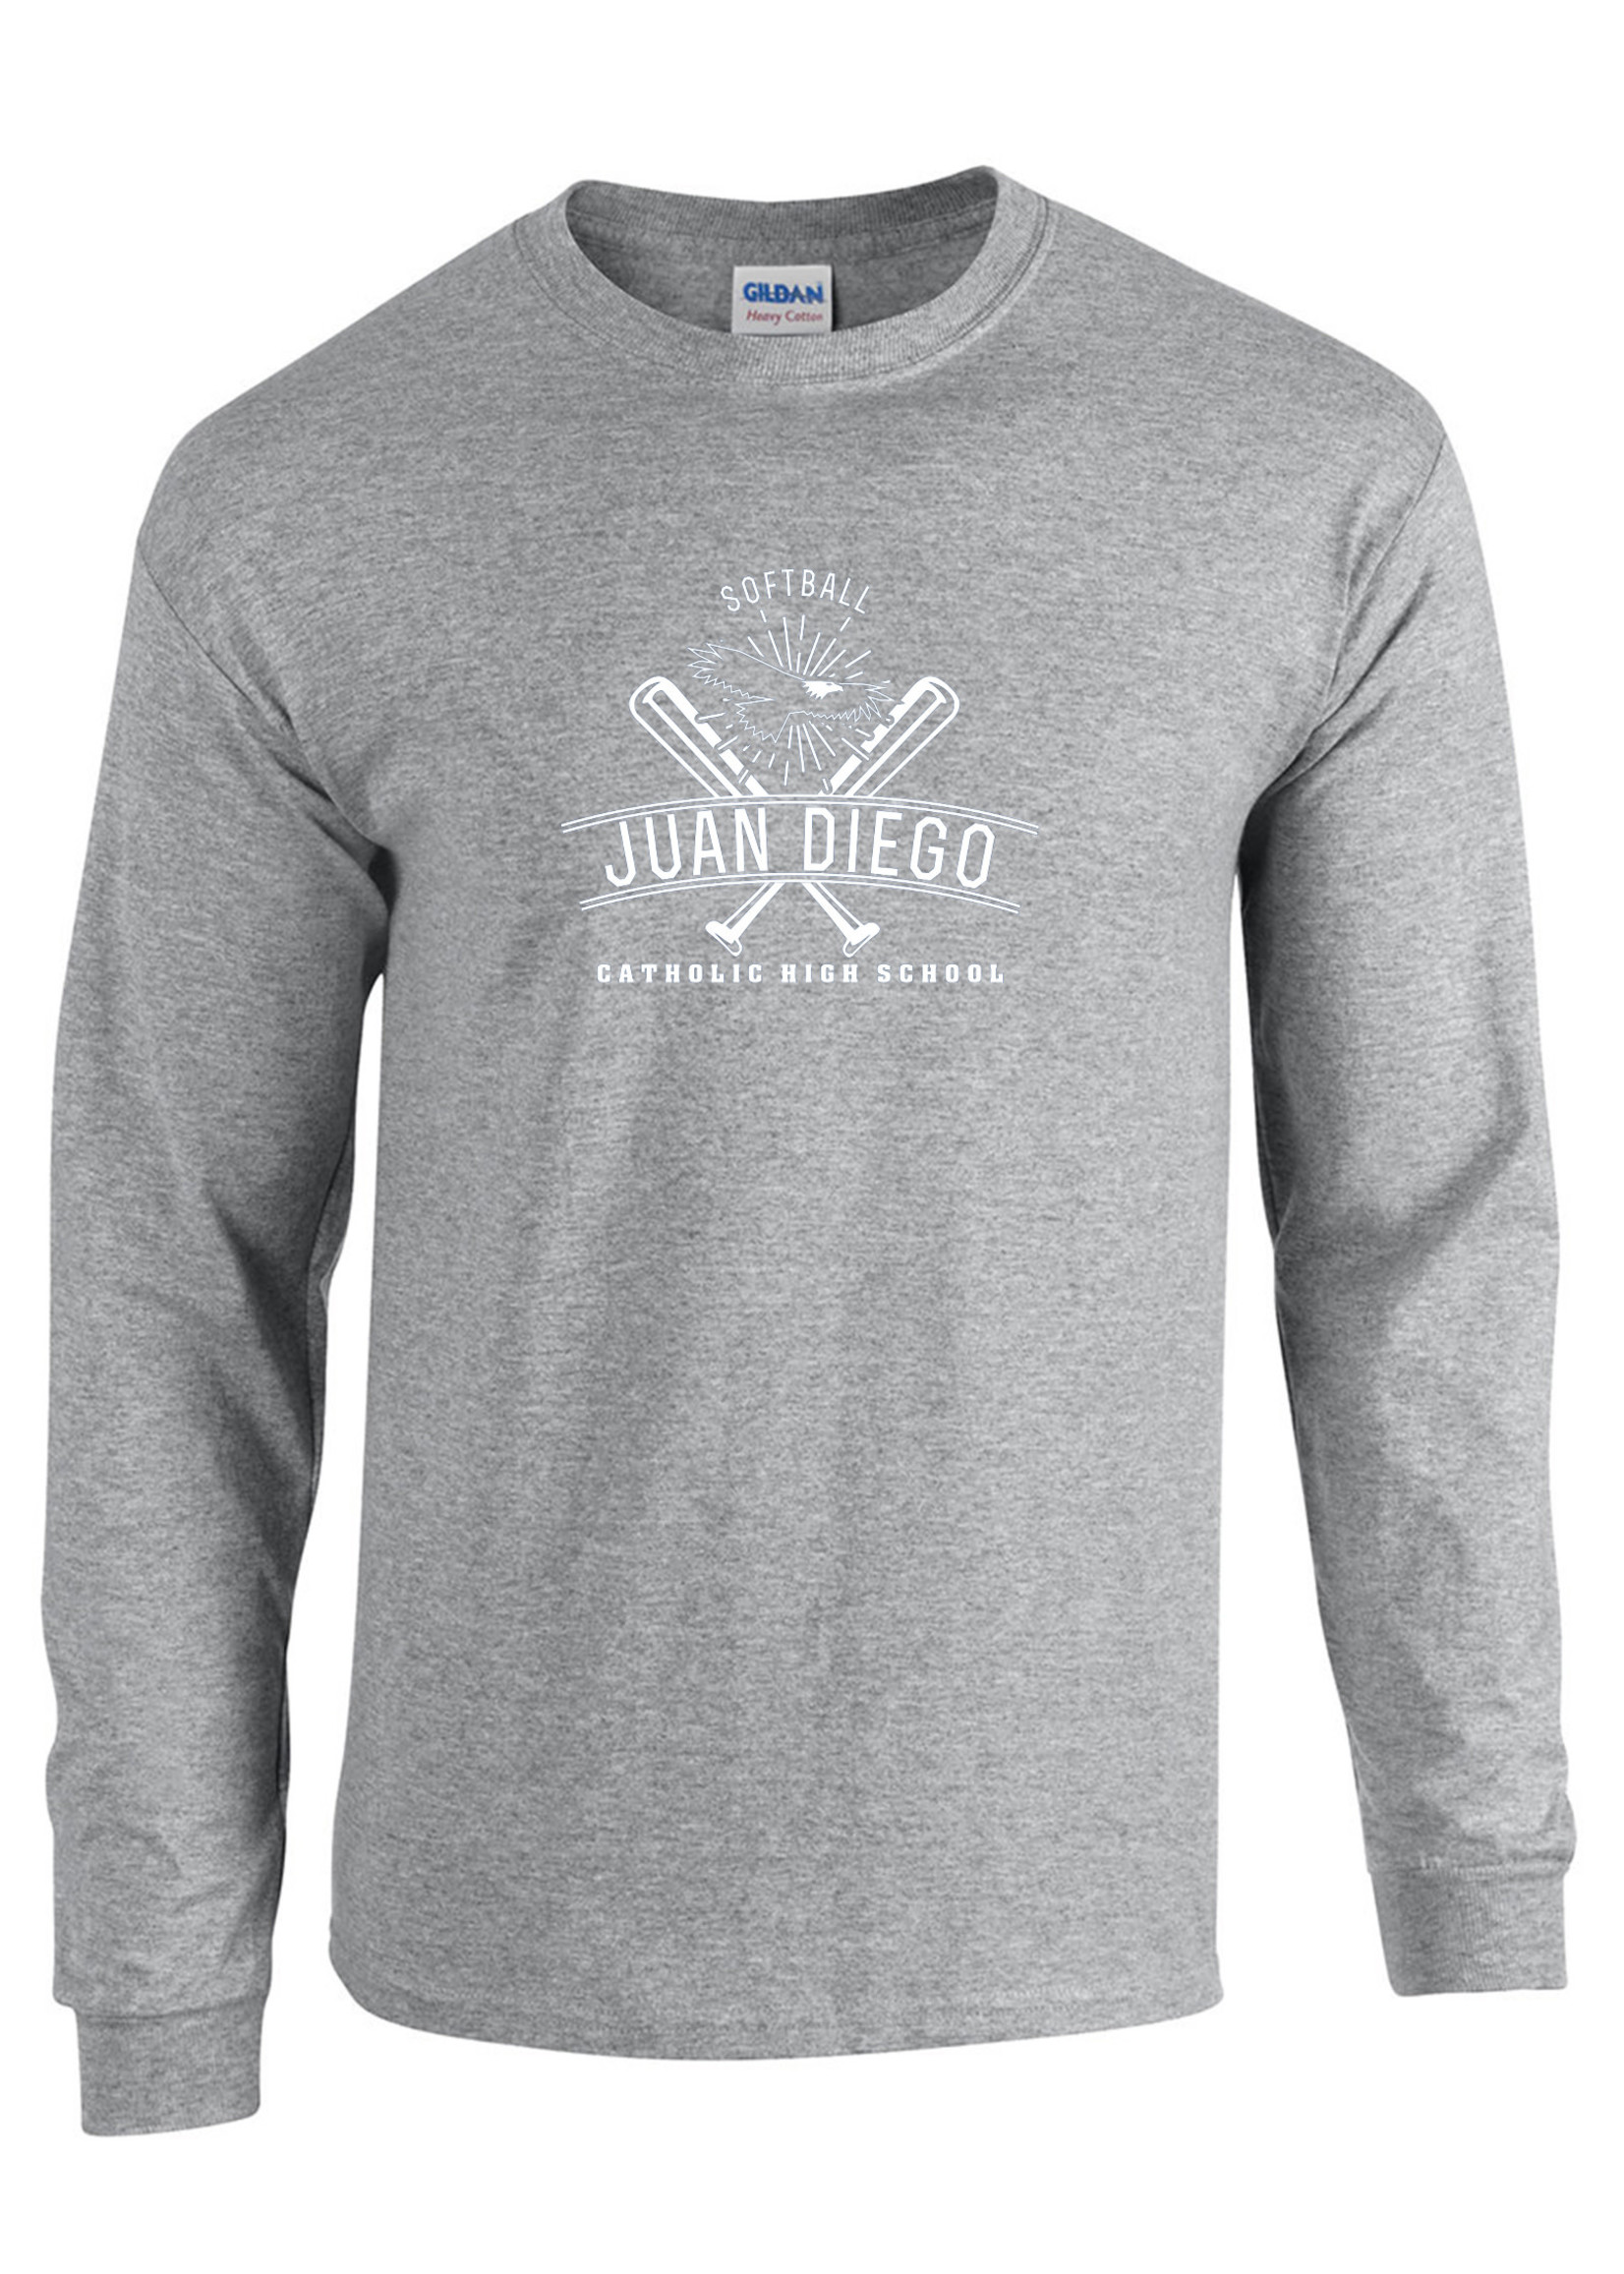 NON-UNIFORM JD Softball Spirit Long Sleeve T-Shirt, legacy bat design